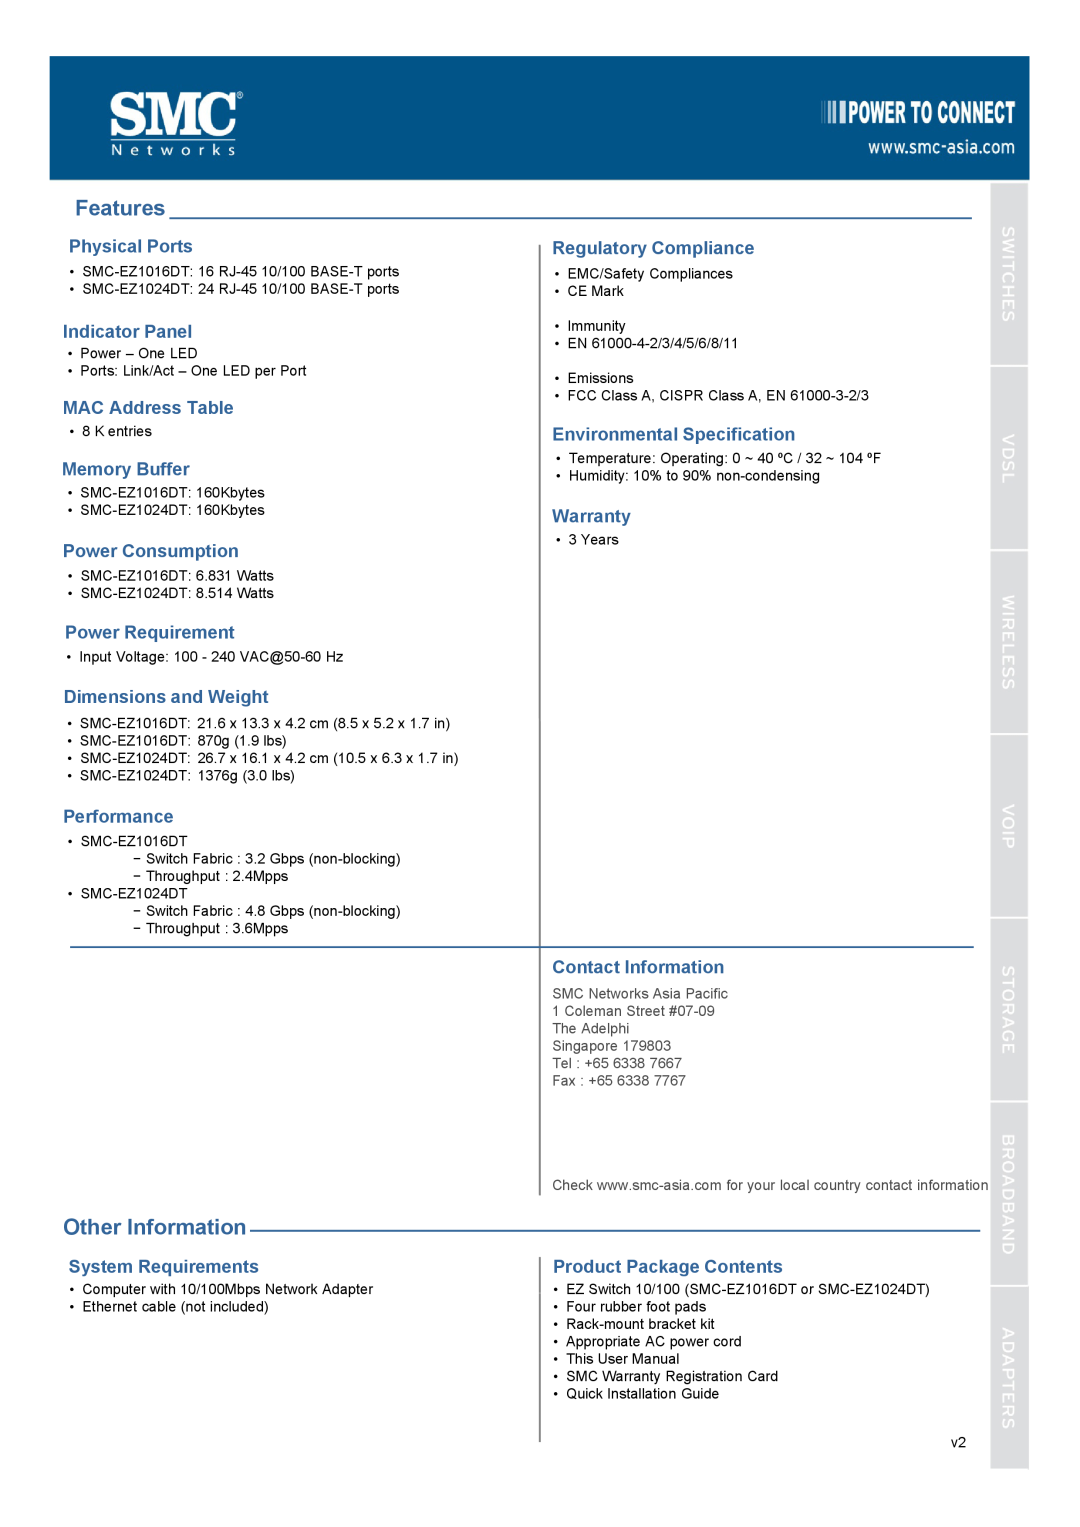 SMC Networks SMC-EZ1016DT manual Features, Other Information 